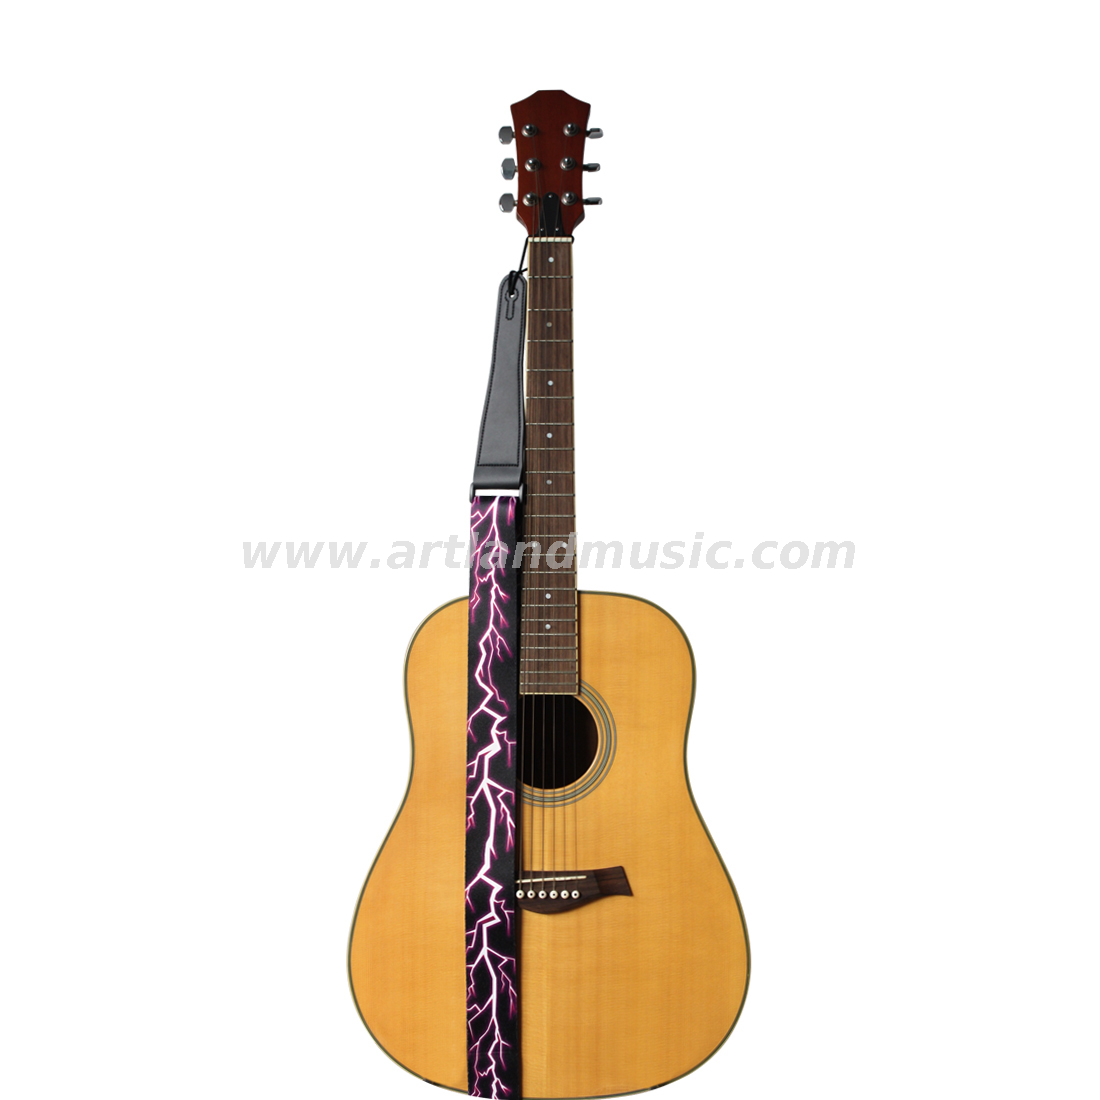 Correa de guitarra Lightning violeta (GSP01)